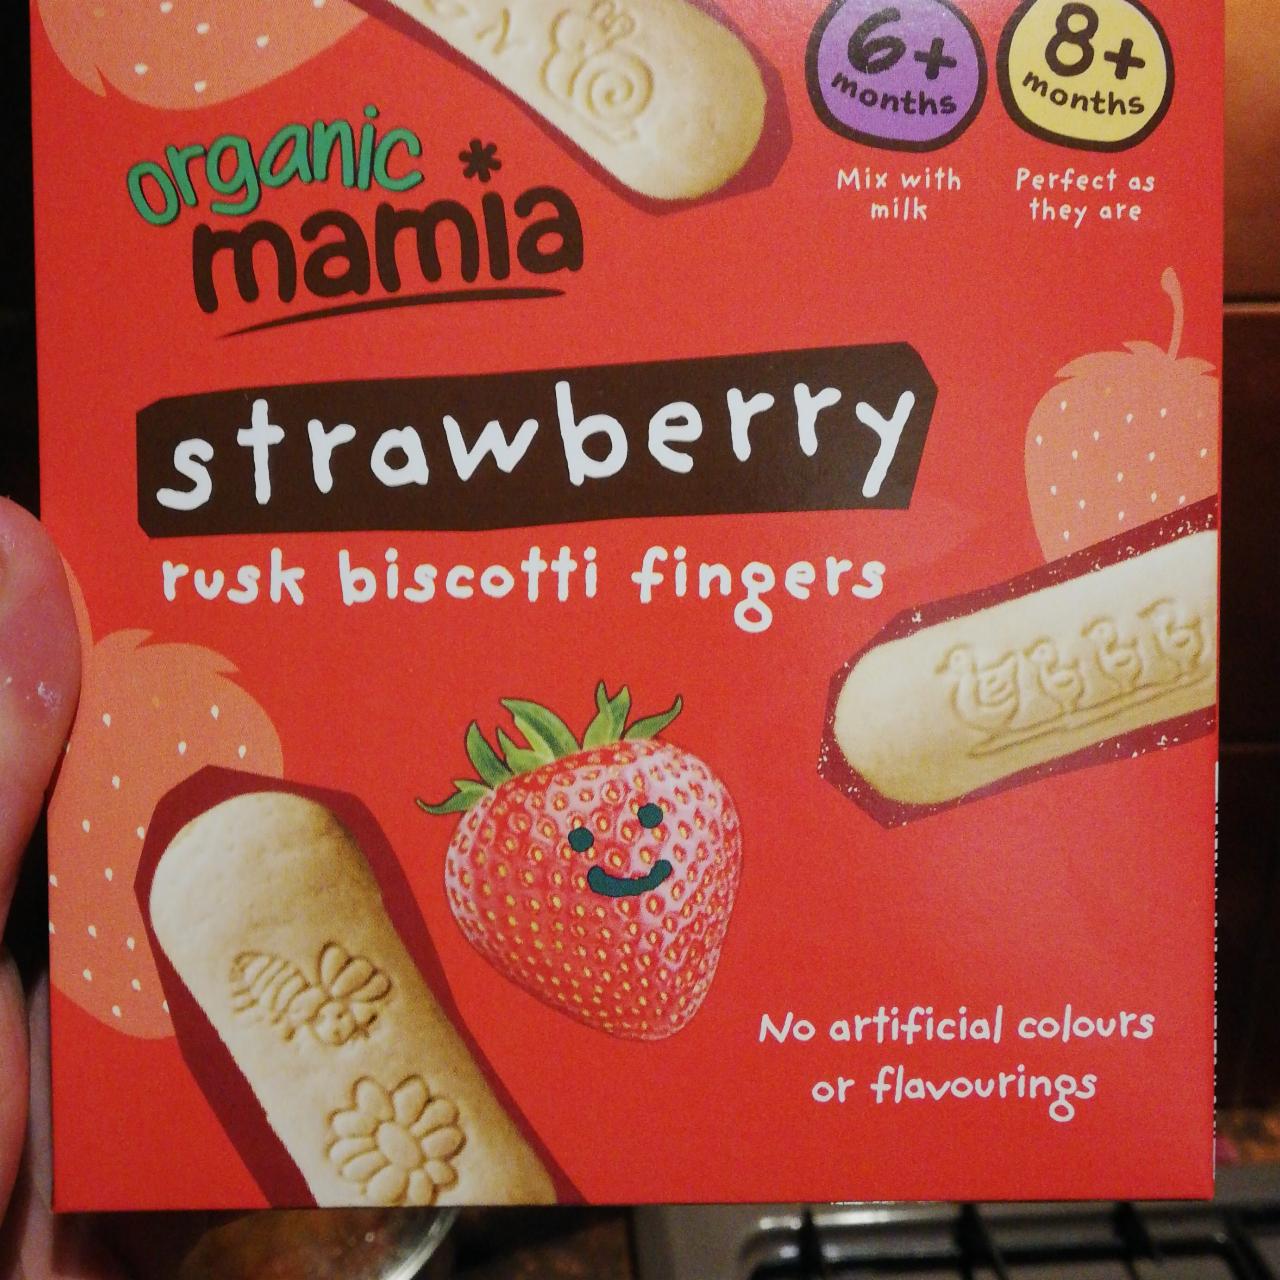 Fotografie - Strawberry Rusk Biscotti Fingers organic Mamia